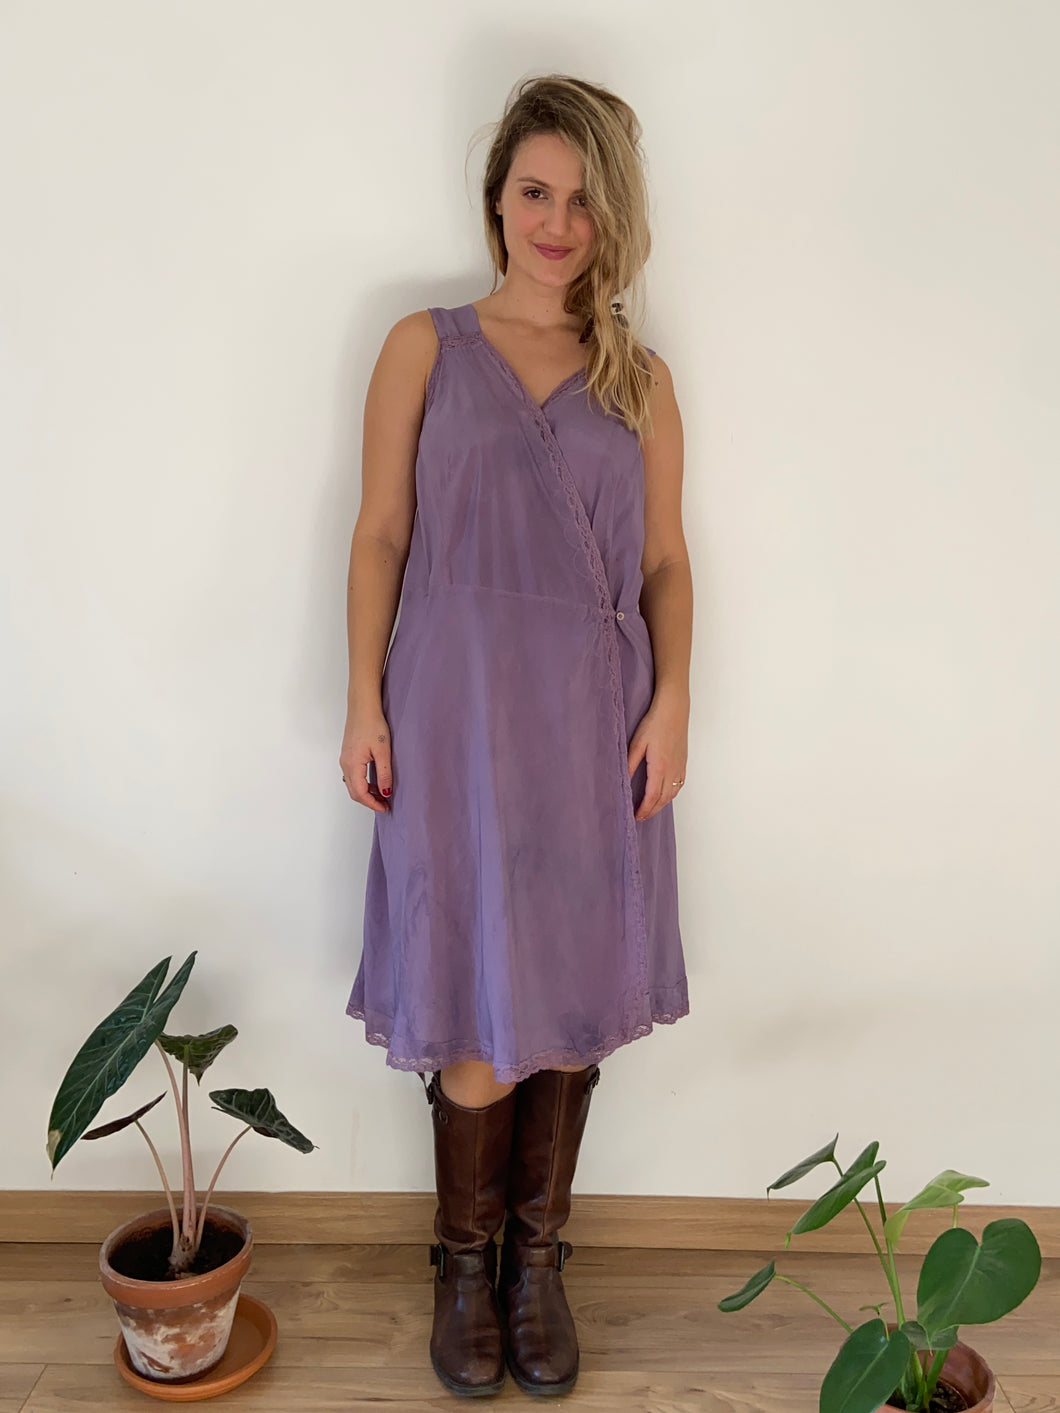 Vintage 20s silk lace purple dyed dress